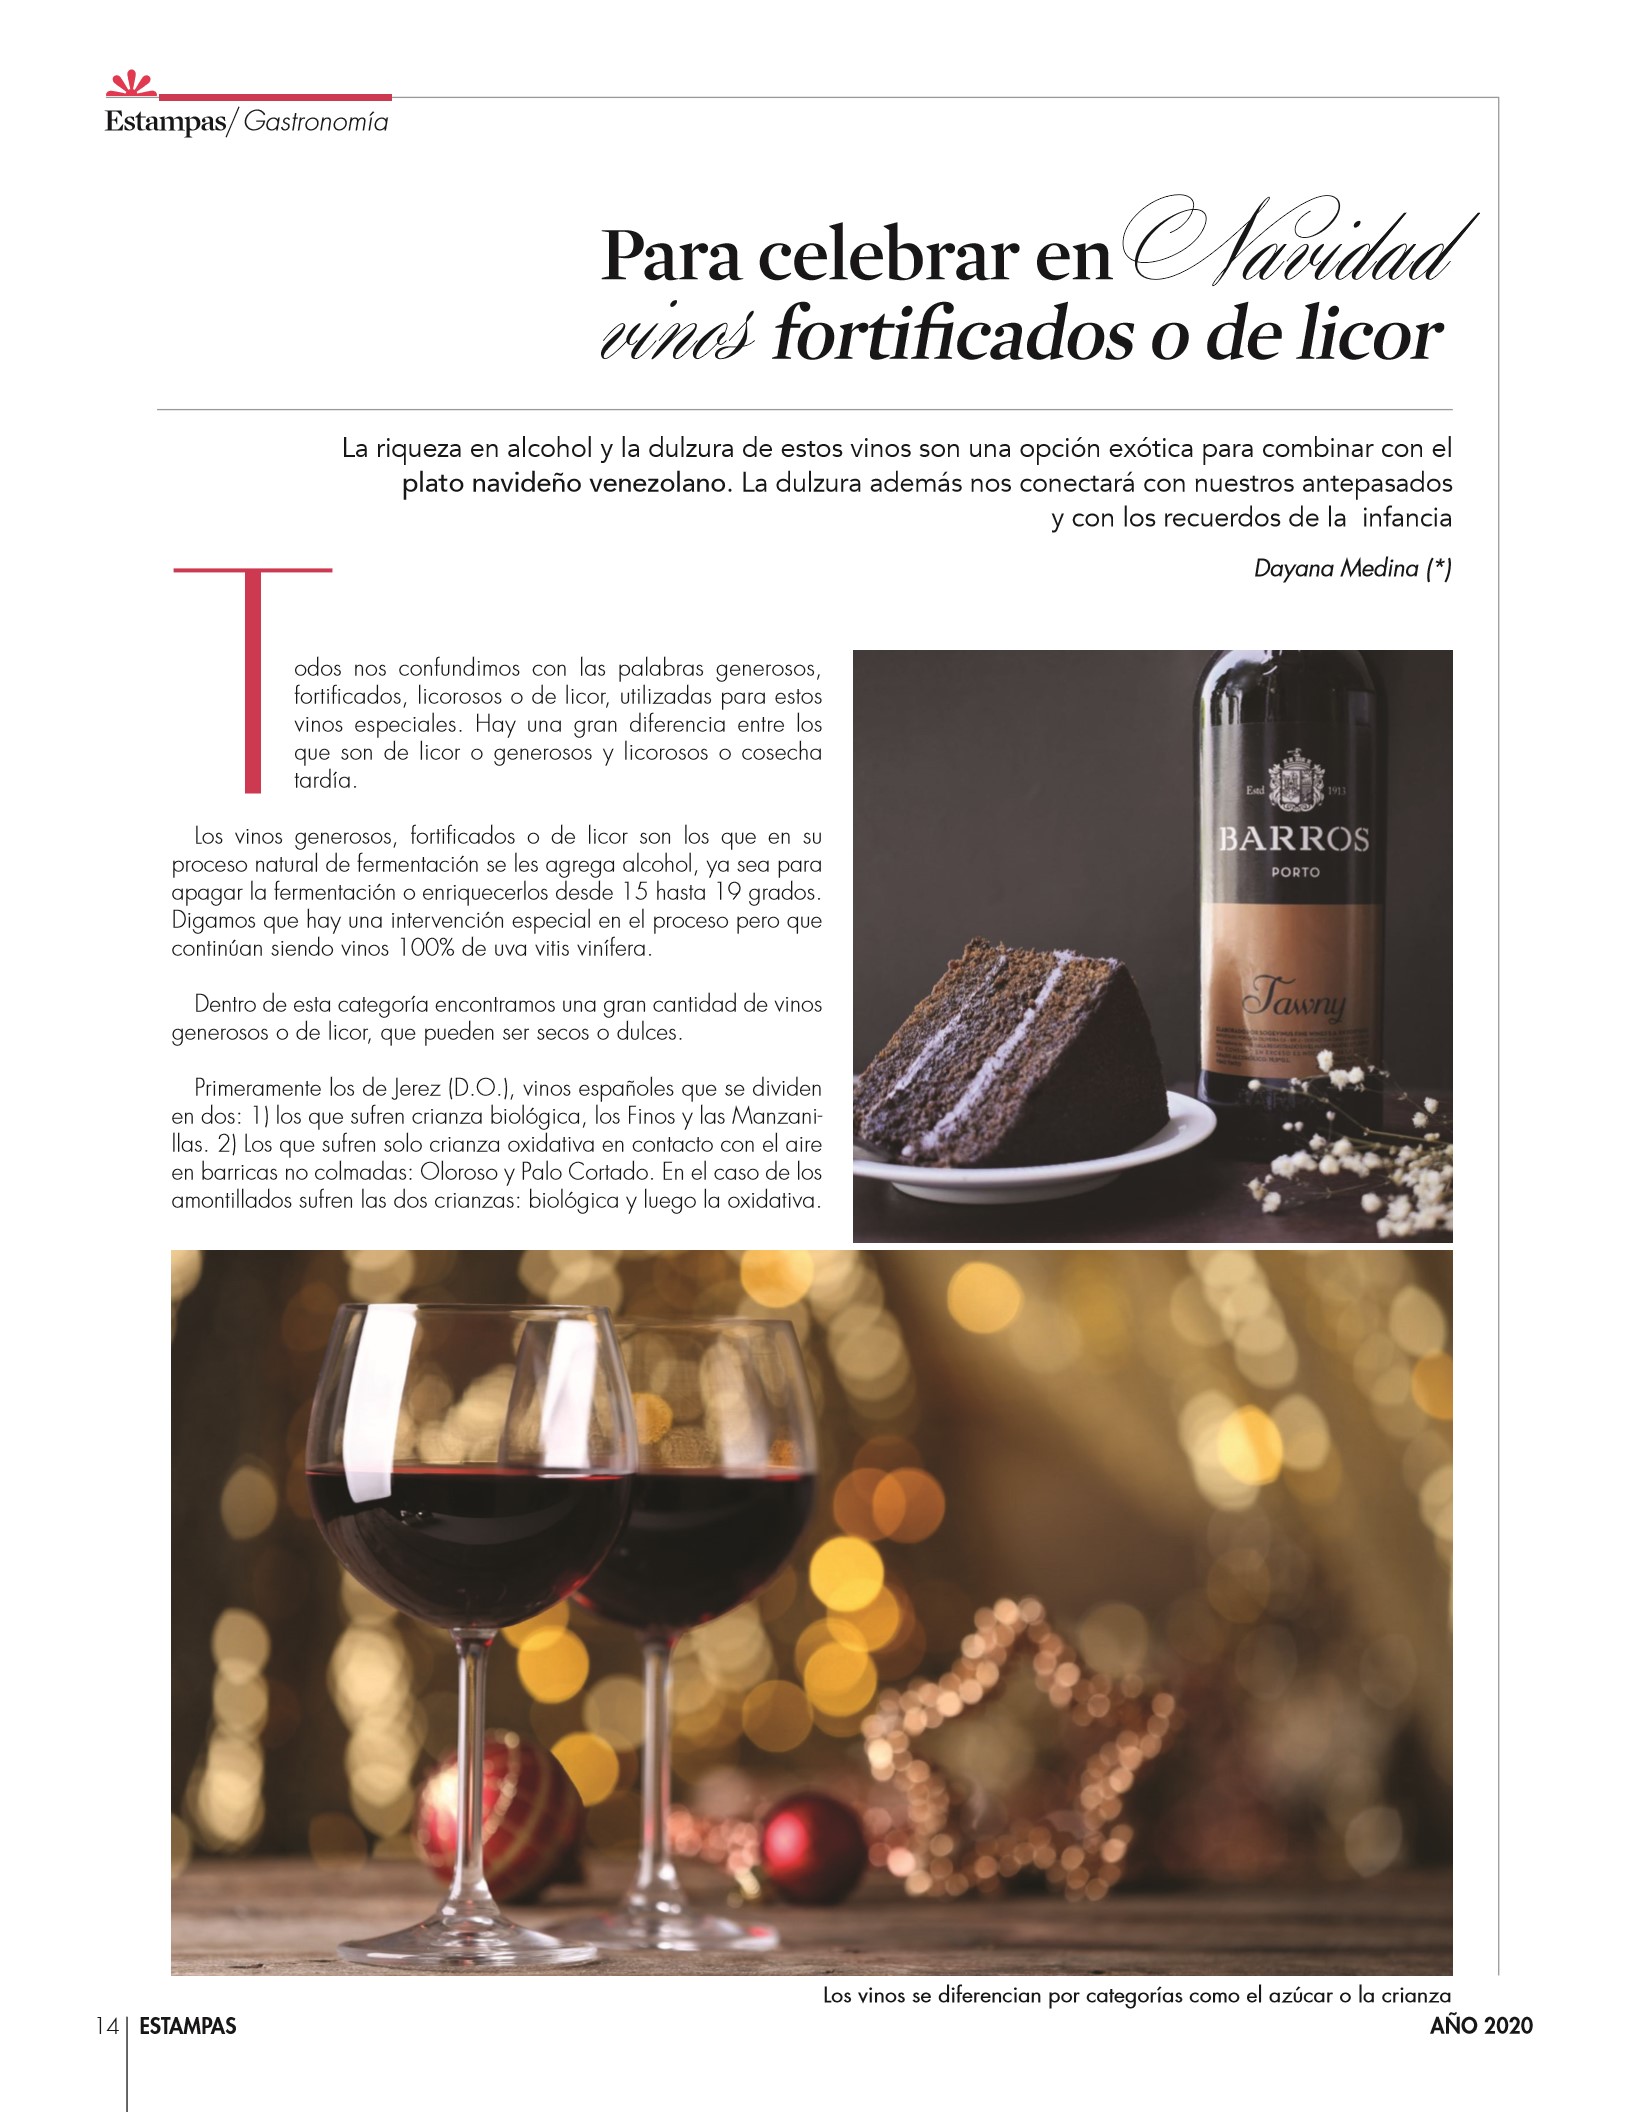 14-REV Gastronomía: Dayana Medina ­ Para celebrar en Navidad: vinos fortificados o de licor